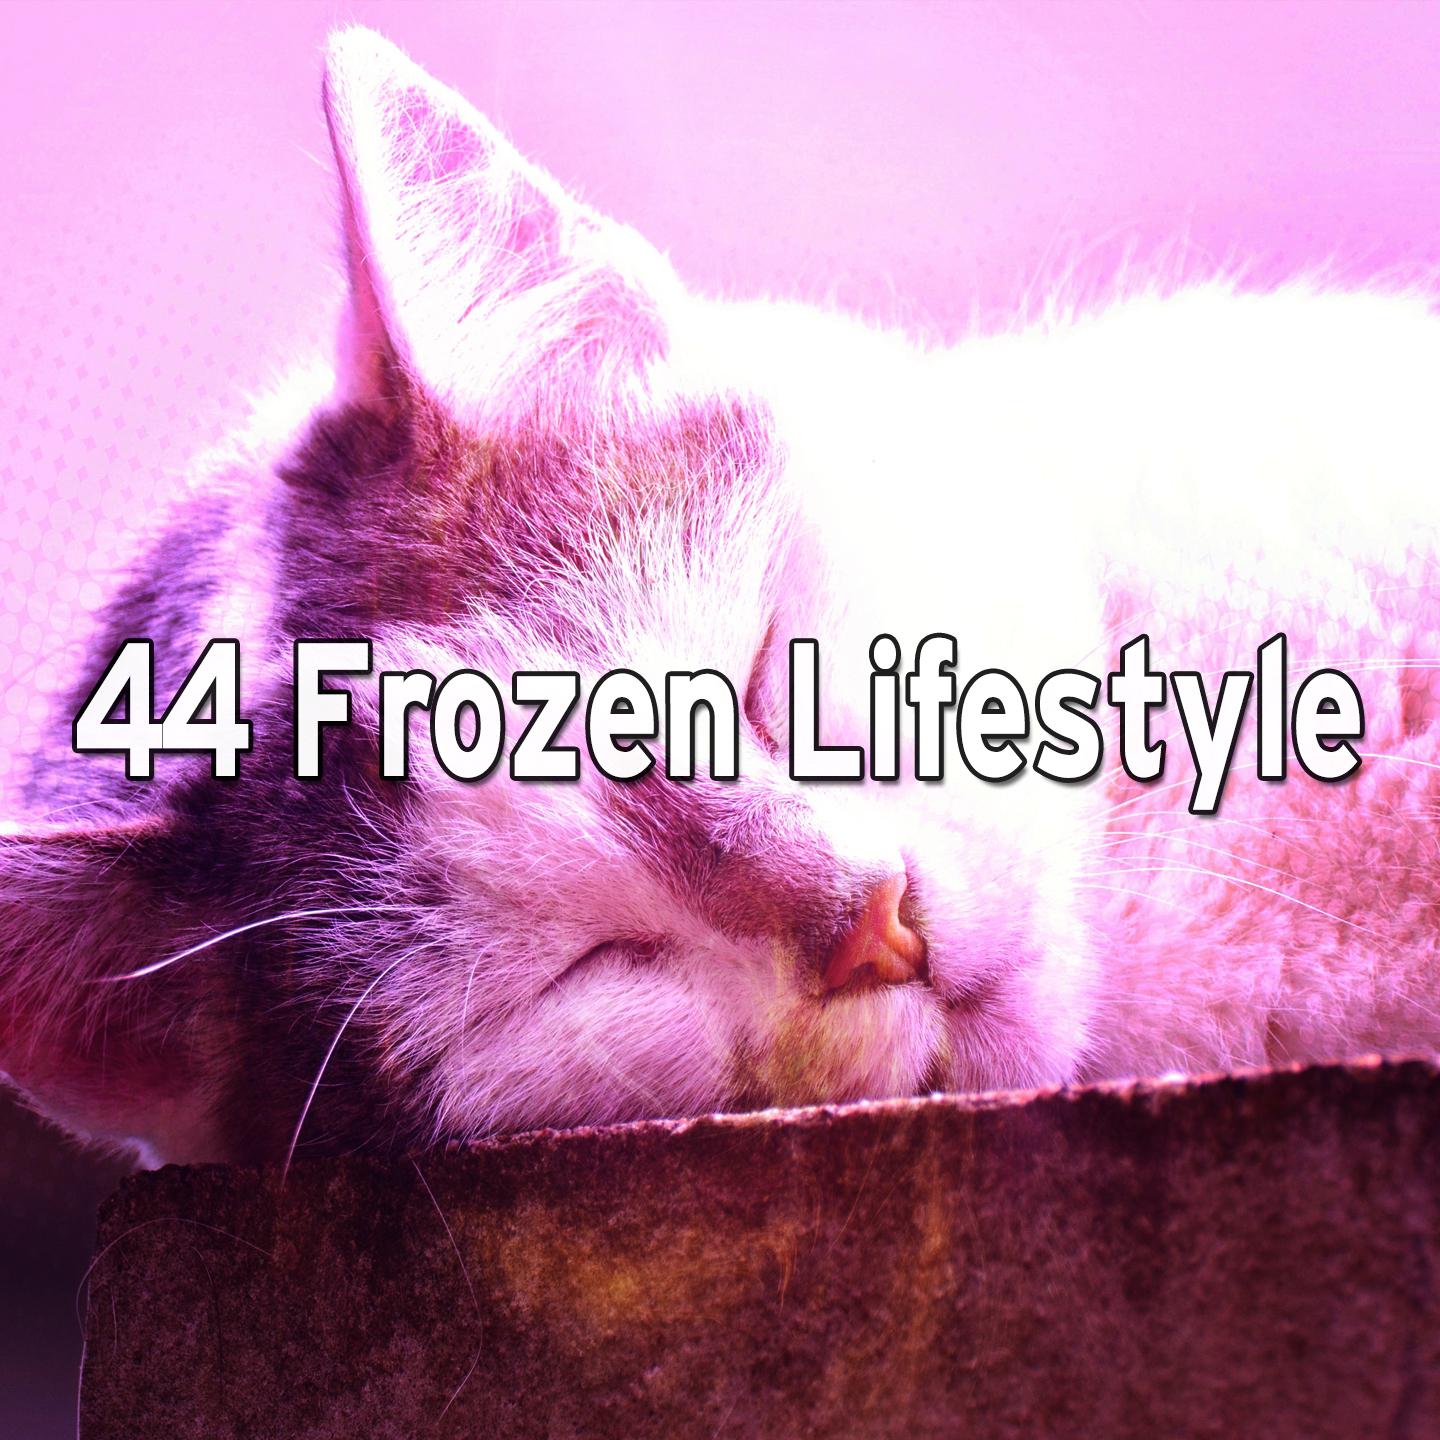 44 Frozen Lifestyle